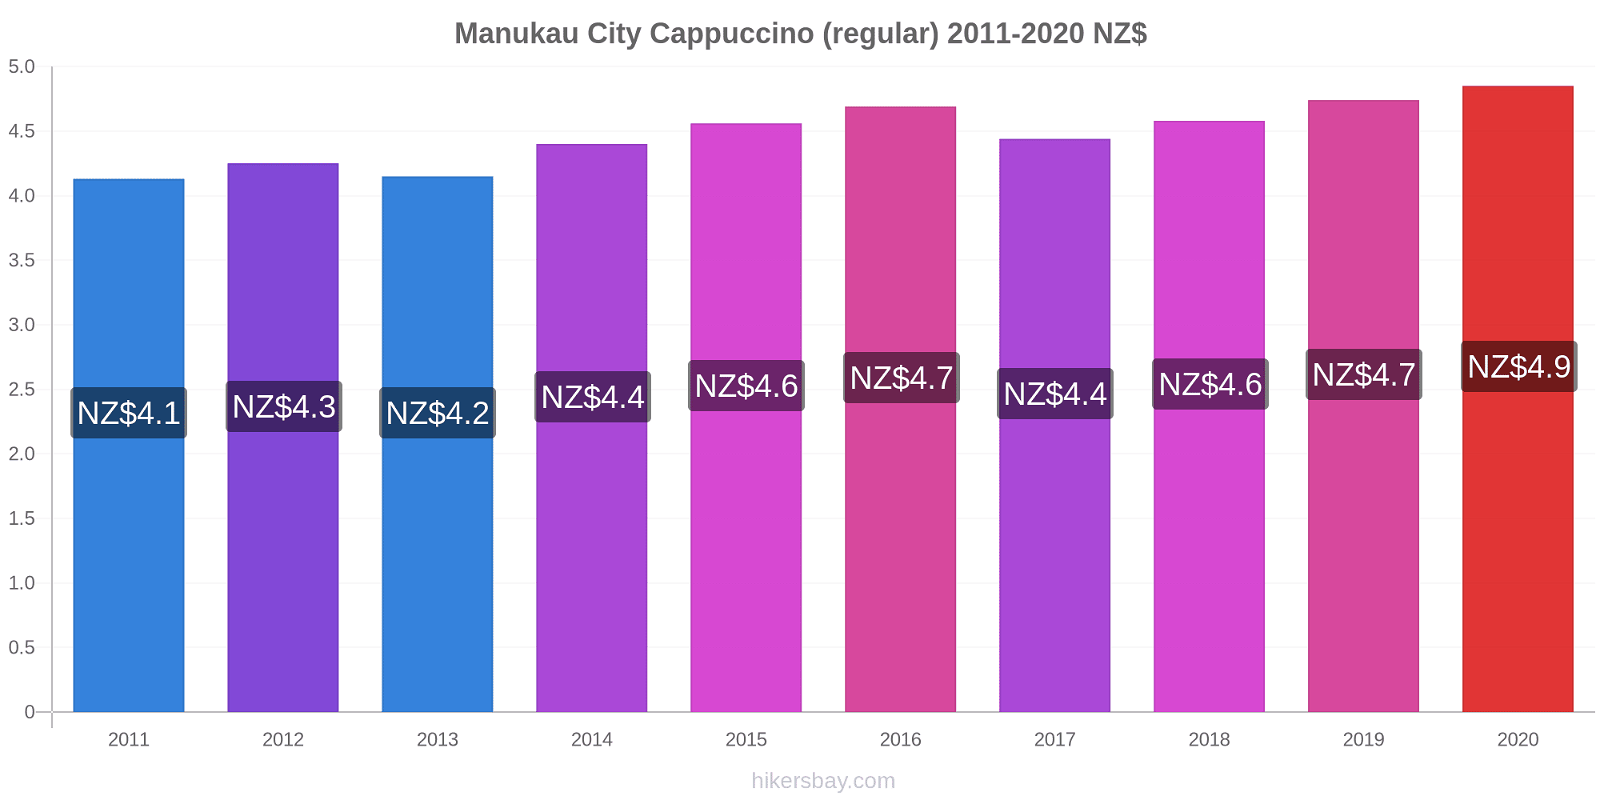 Manukau City price changes Cappuccino (regular) hikersbay.com